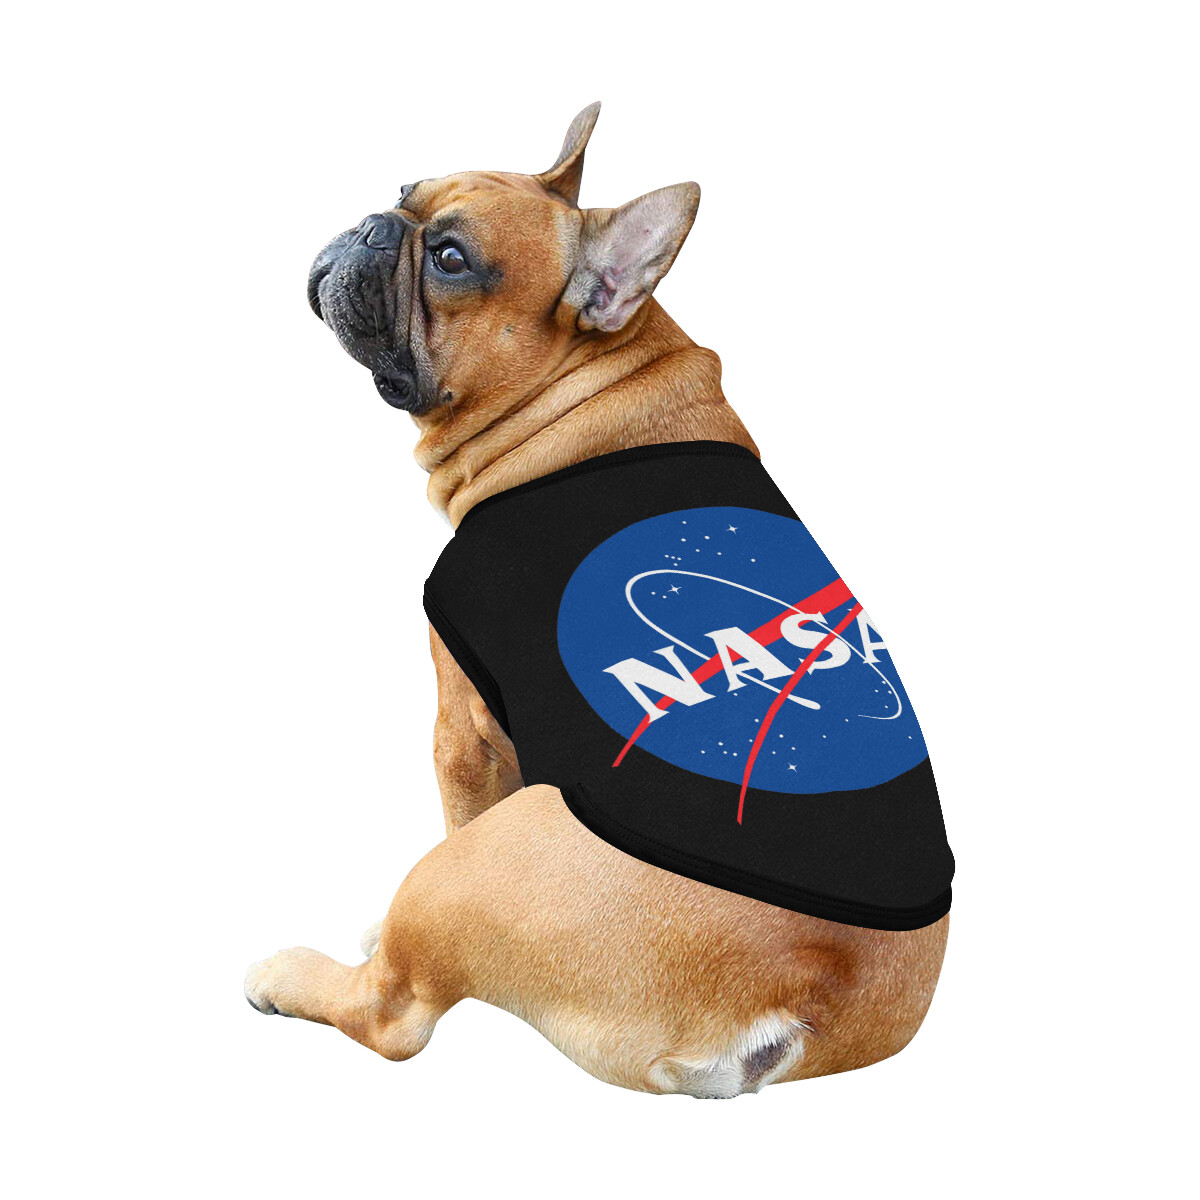 🐕 Nasa Logo Space Dog shirt, Dog Tank Top, Dog t-shirt, Dog clothes, Gifts, front back print, 7 sizes XS to 3XL, dog gifts, black